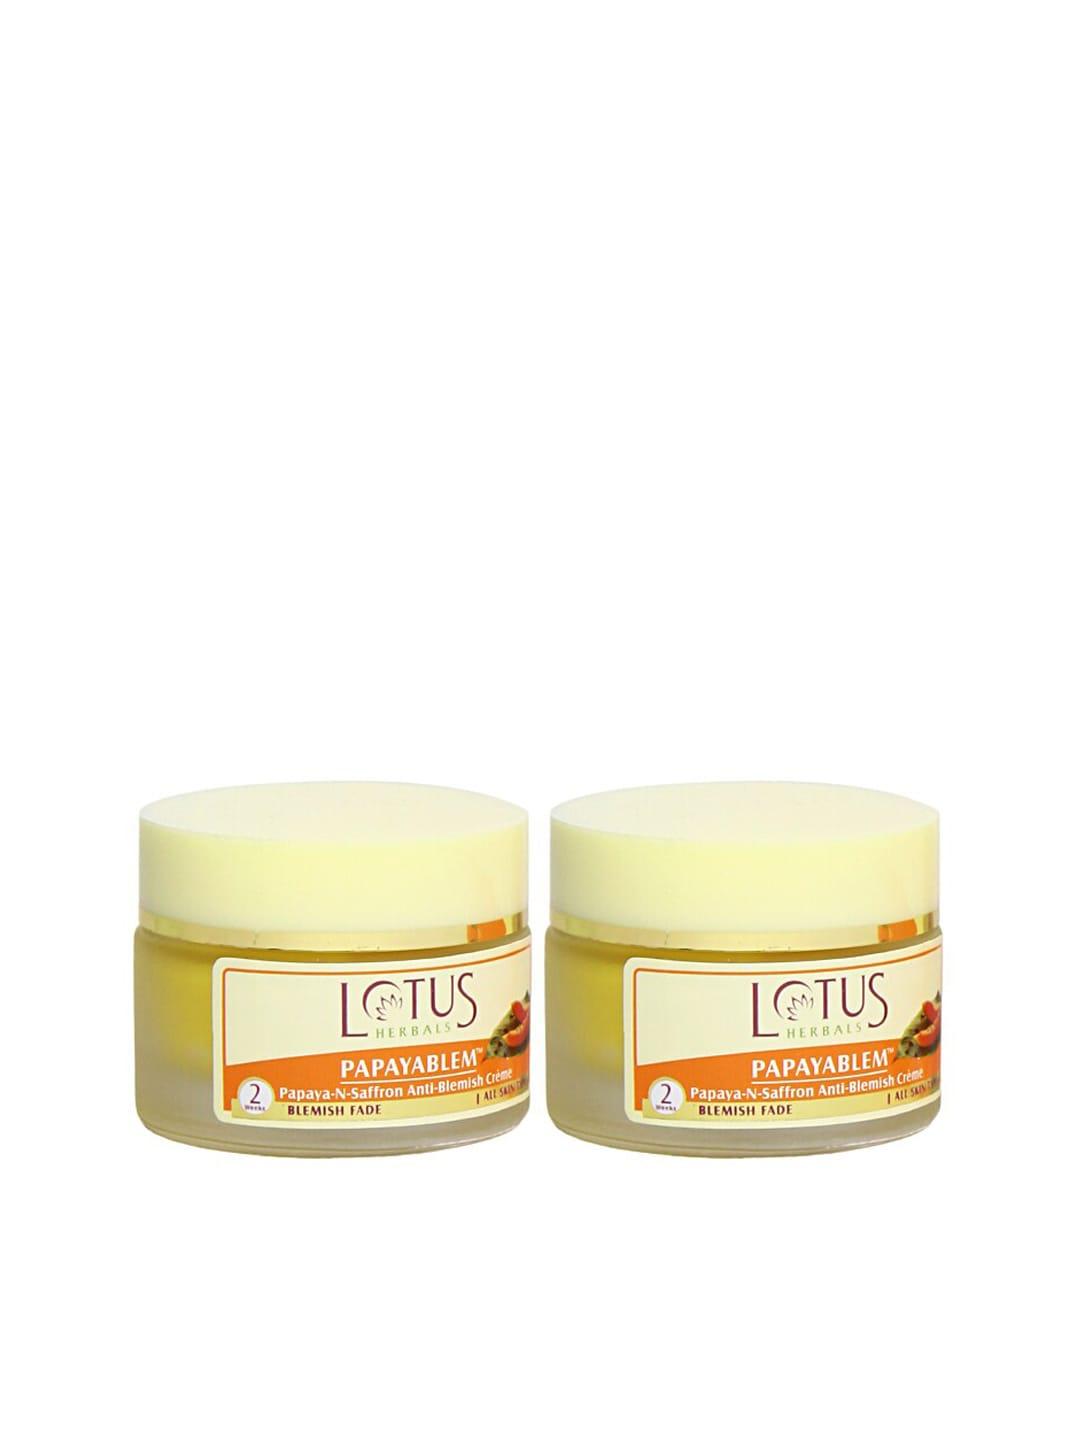 Lotus Herbals Set of 2 Papayablem Anti-Blemish Face Creme with Saffron - 50 g Each